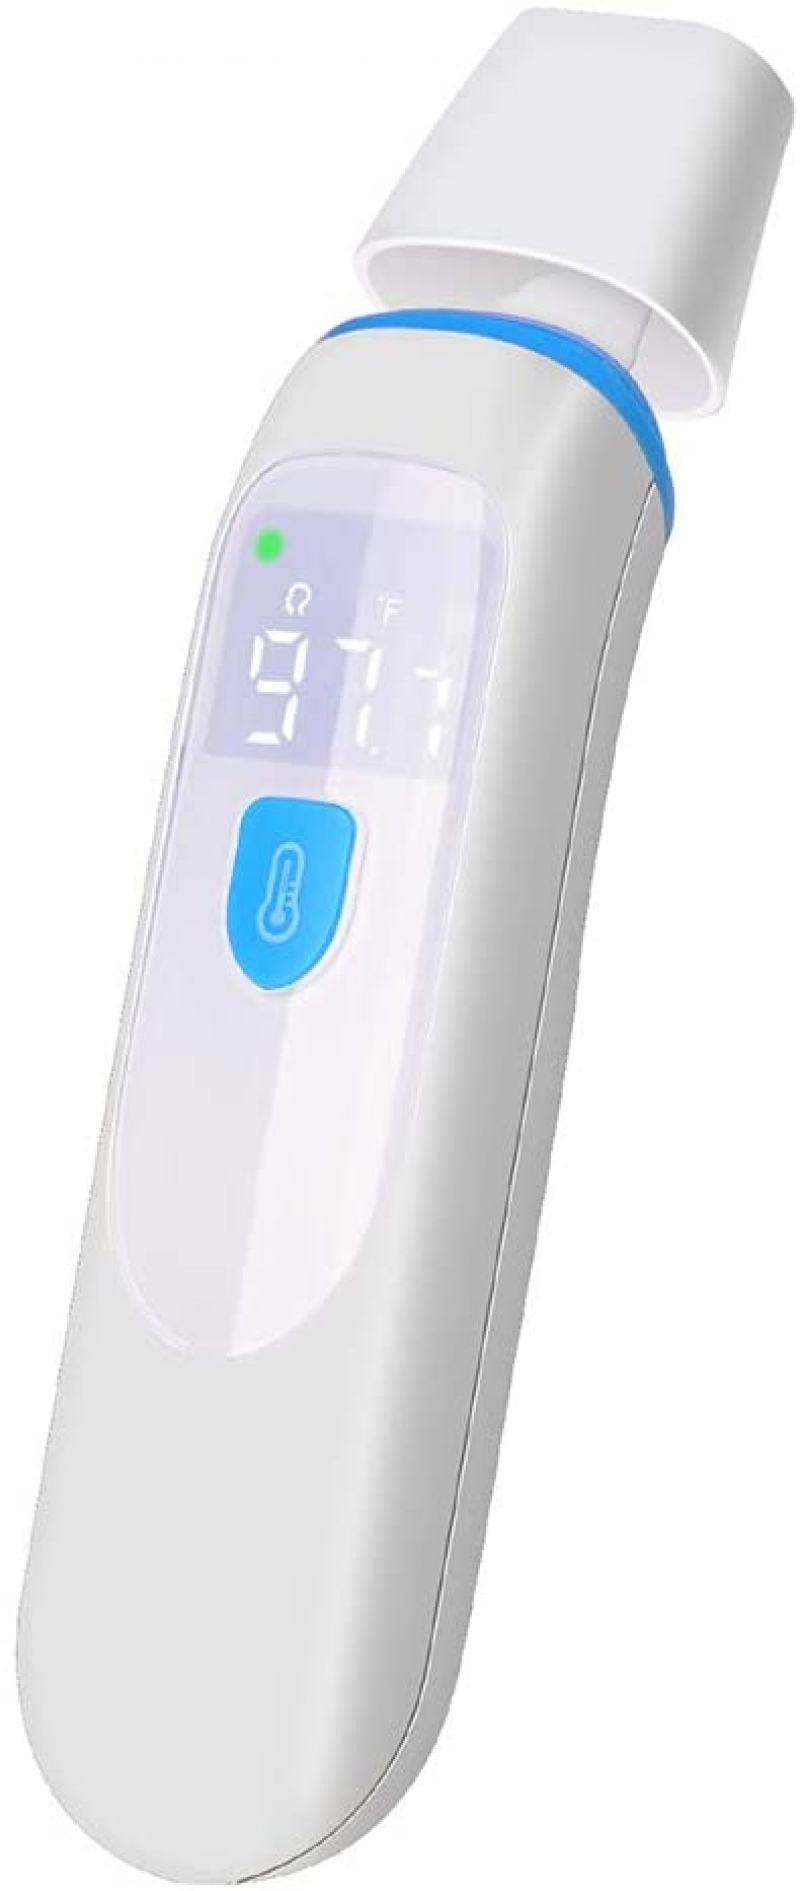 ihocon: Surcom Infrared Thermometer 額頭溫度計